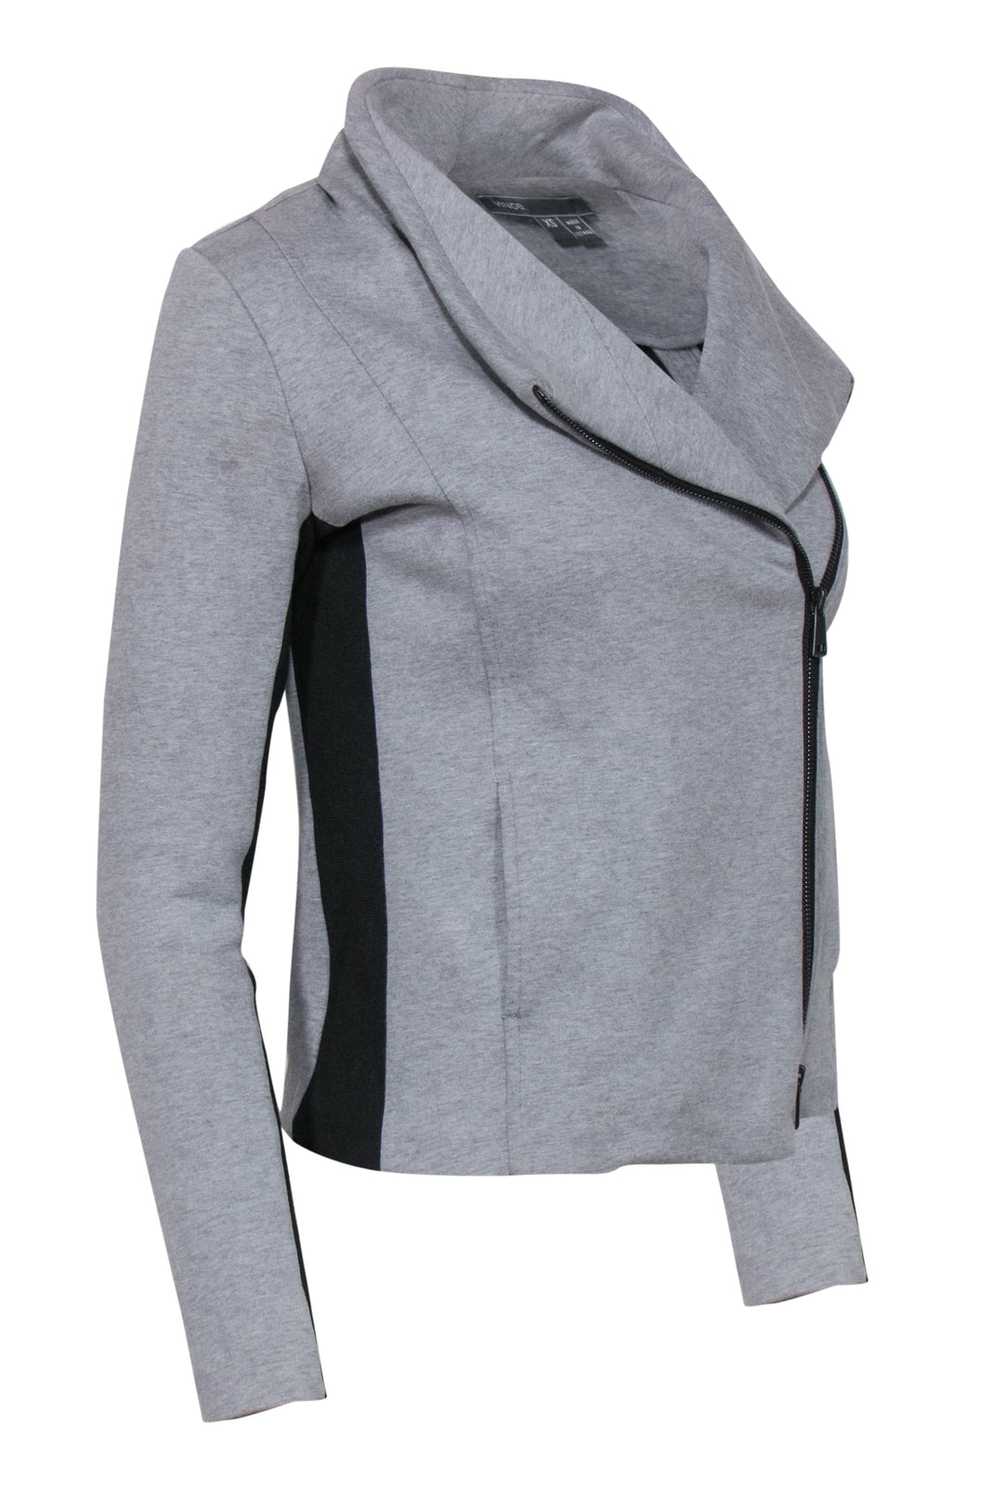 Vince - Gray Cotton Zip-Up Moto-Style Jacket Sz XS - image 2